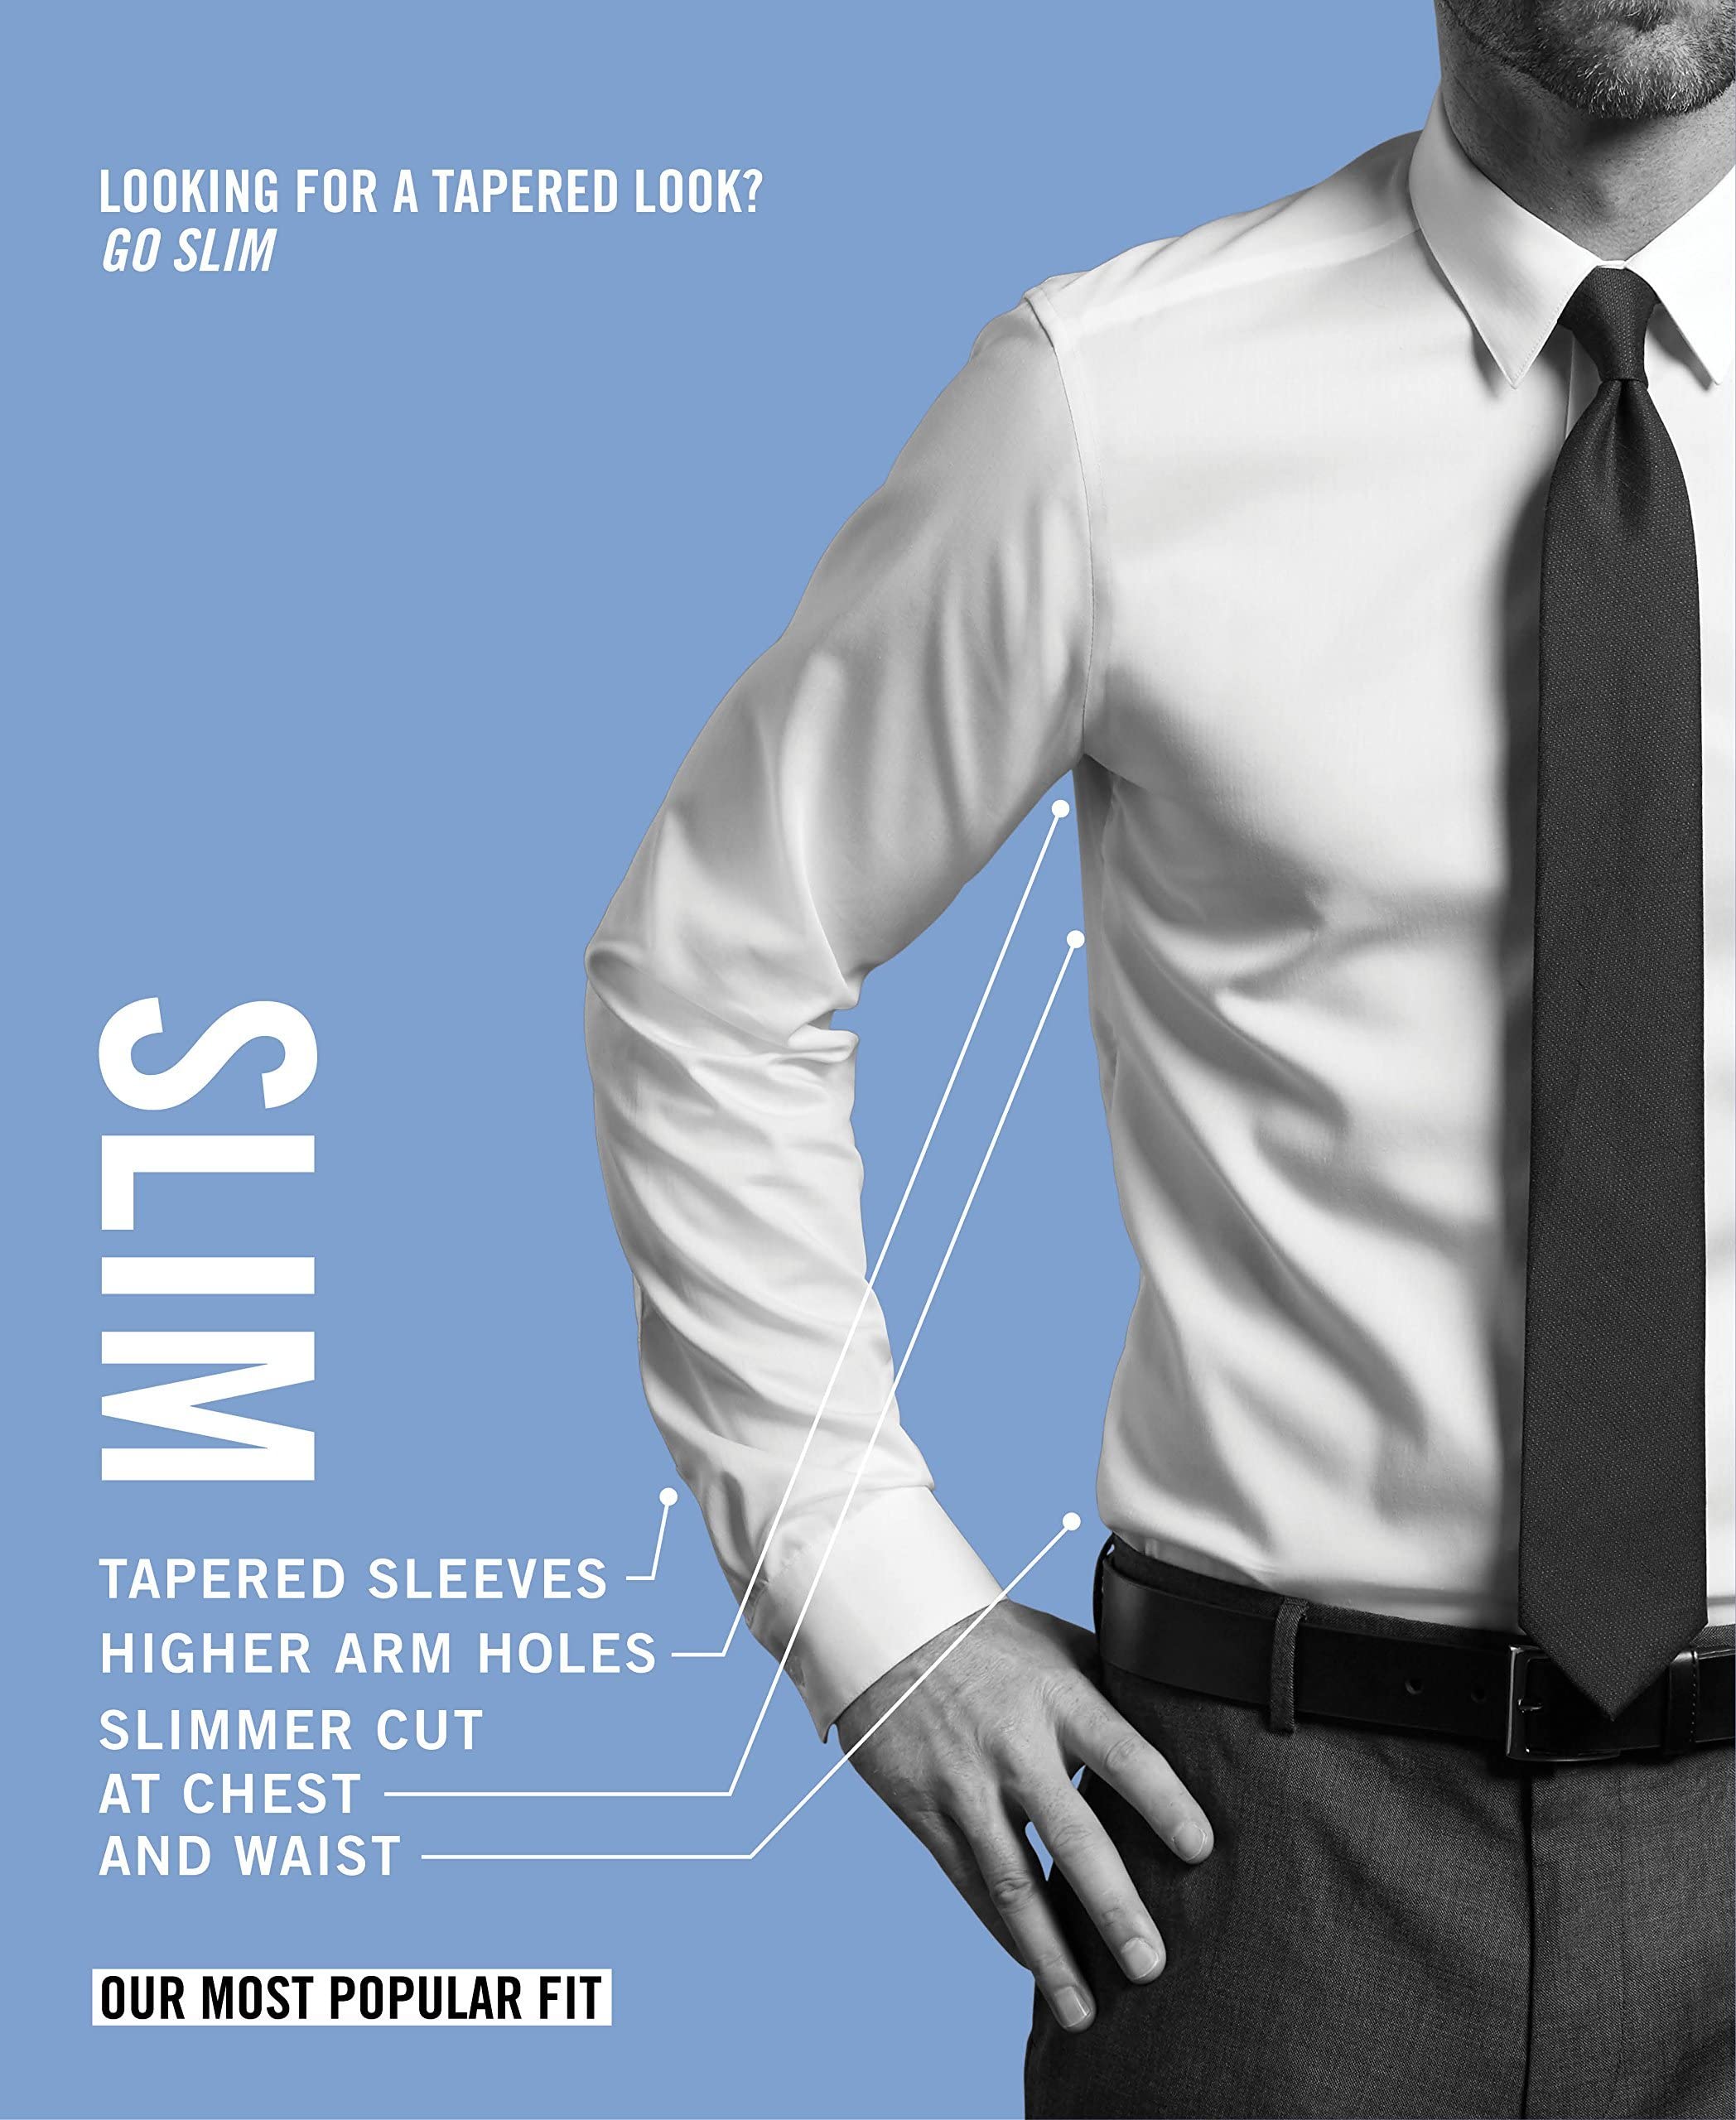 Tommy Hilfiger Men's Dress Shirt Slim Fit Non Iron Solid